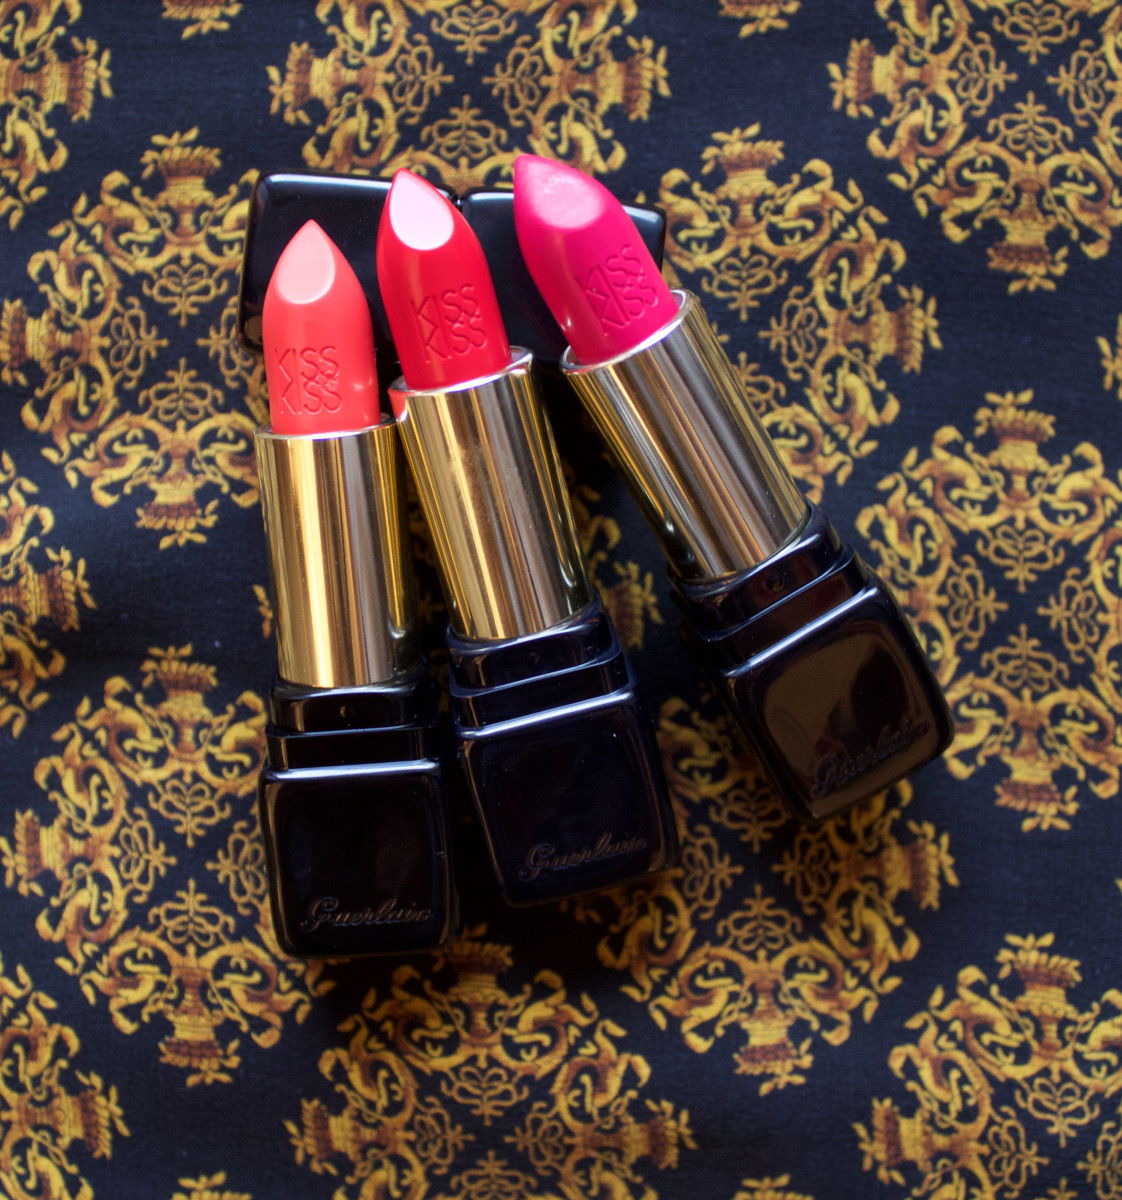 Preverite Guerlain's New in izboljšano Kiss Kiss Lipstick